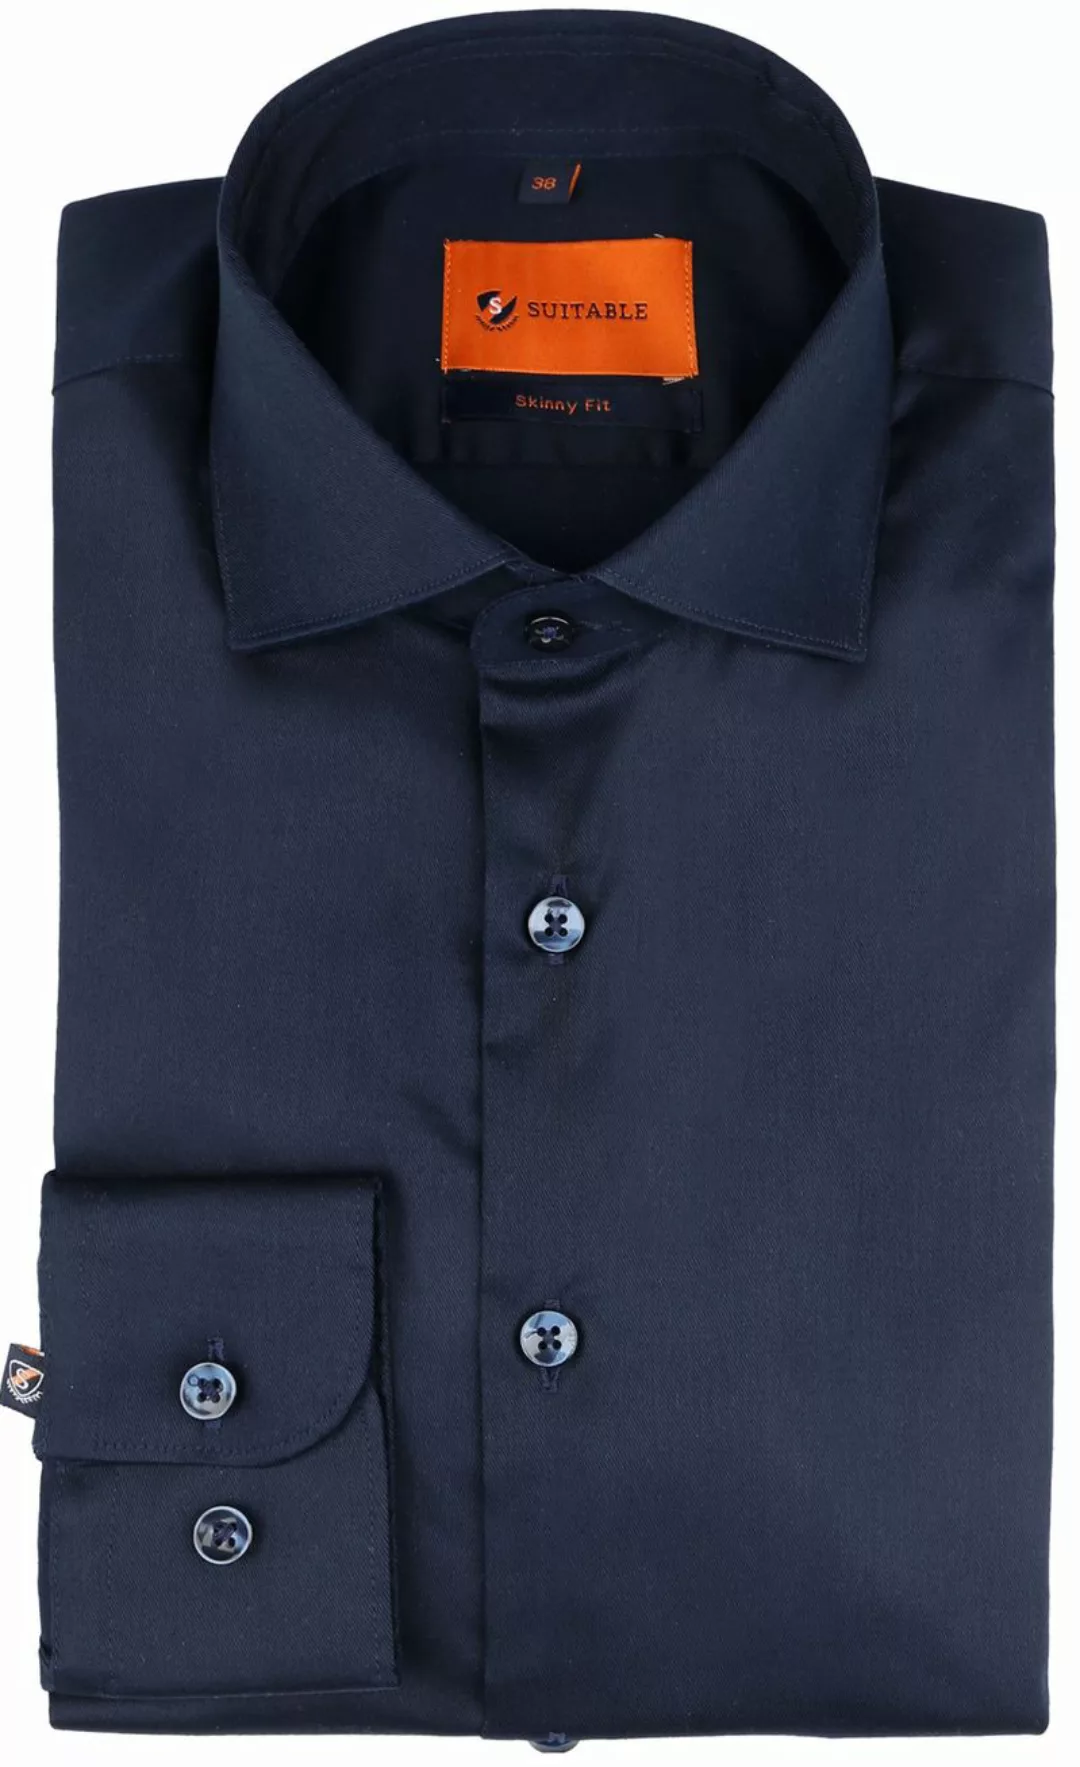 Suitable Hemd Skinny Fit Dunkelblau 241-1 - Größe 41 günstig online kaufen